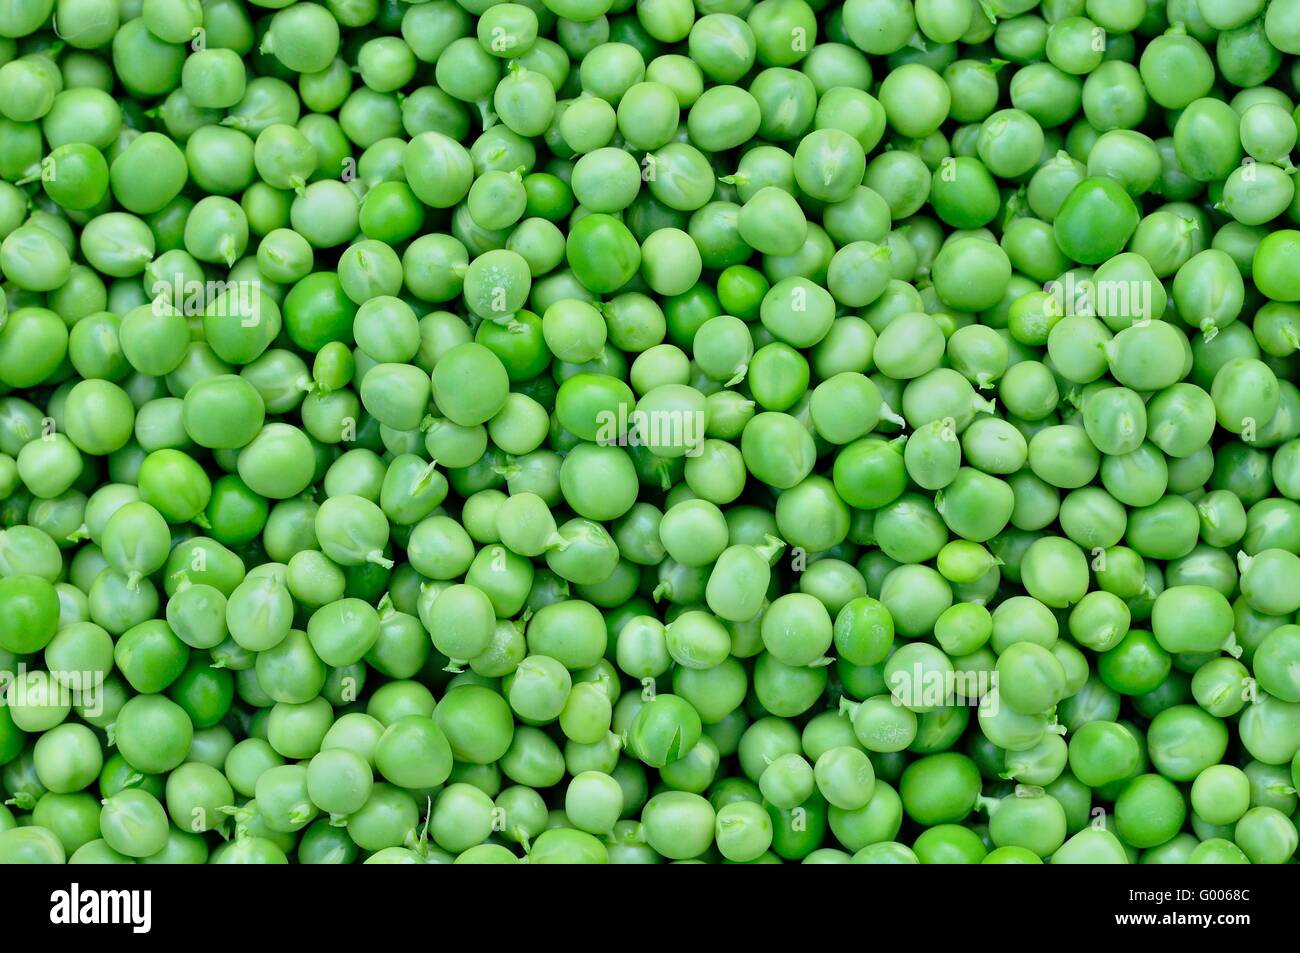 Background of fresh green peas Stock Photo